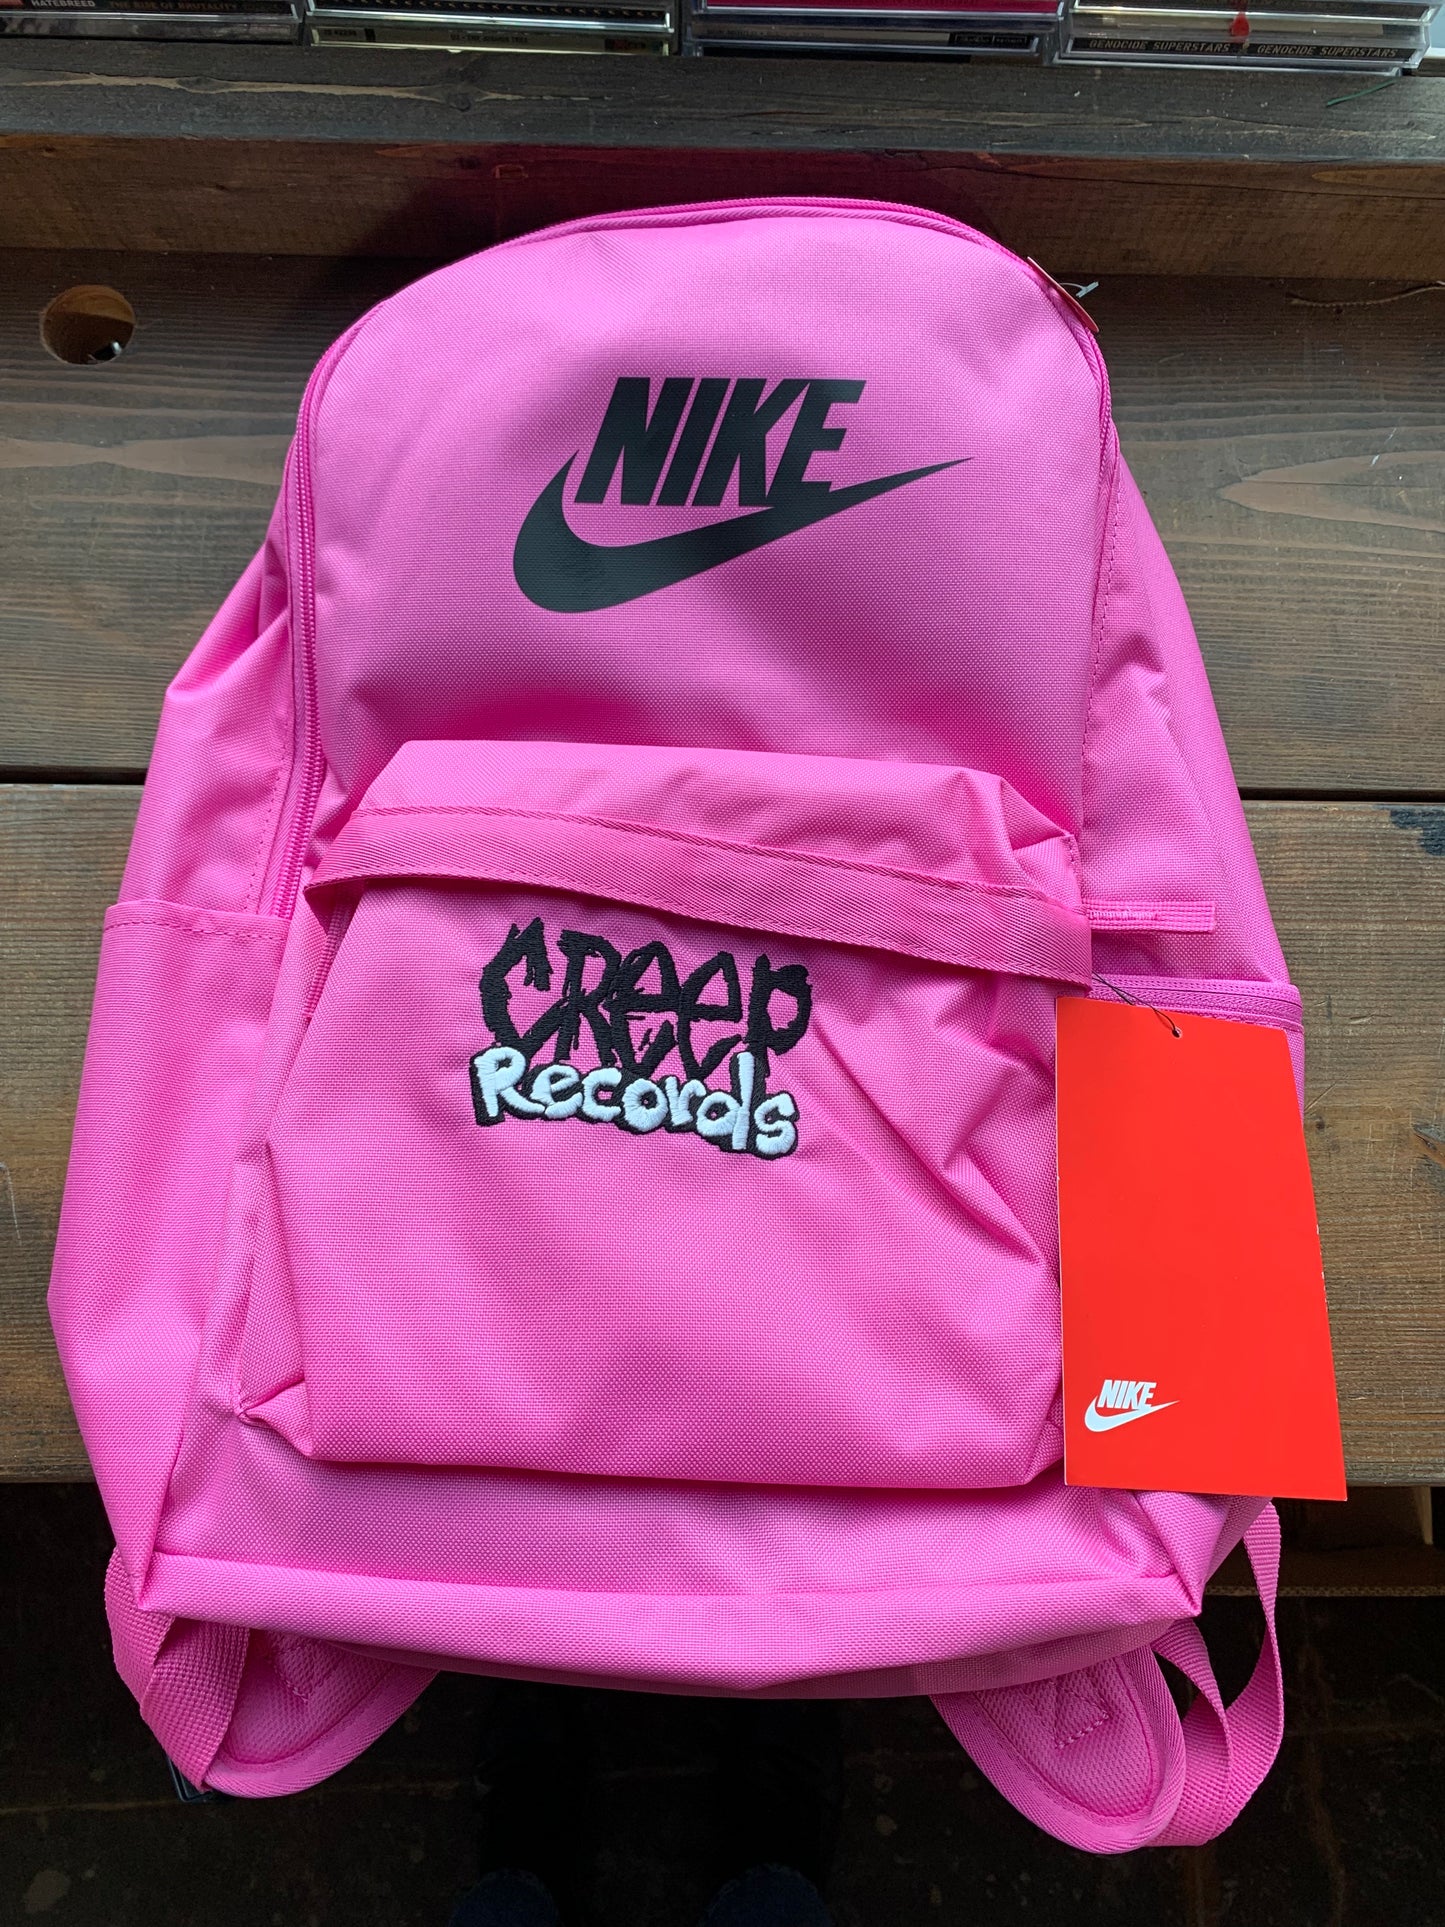 Creep Records Nike Backpack